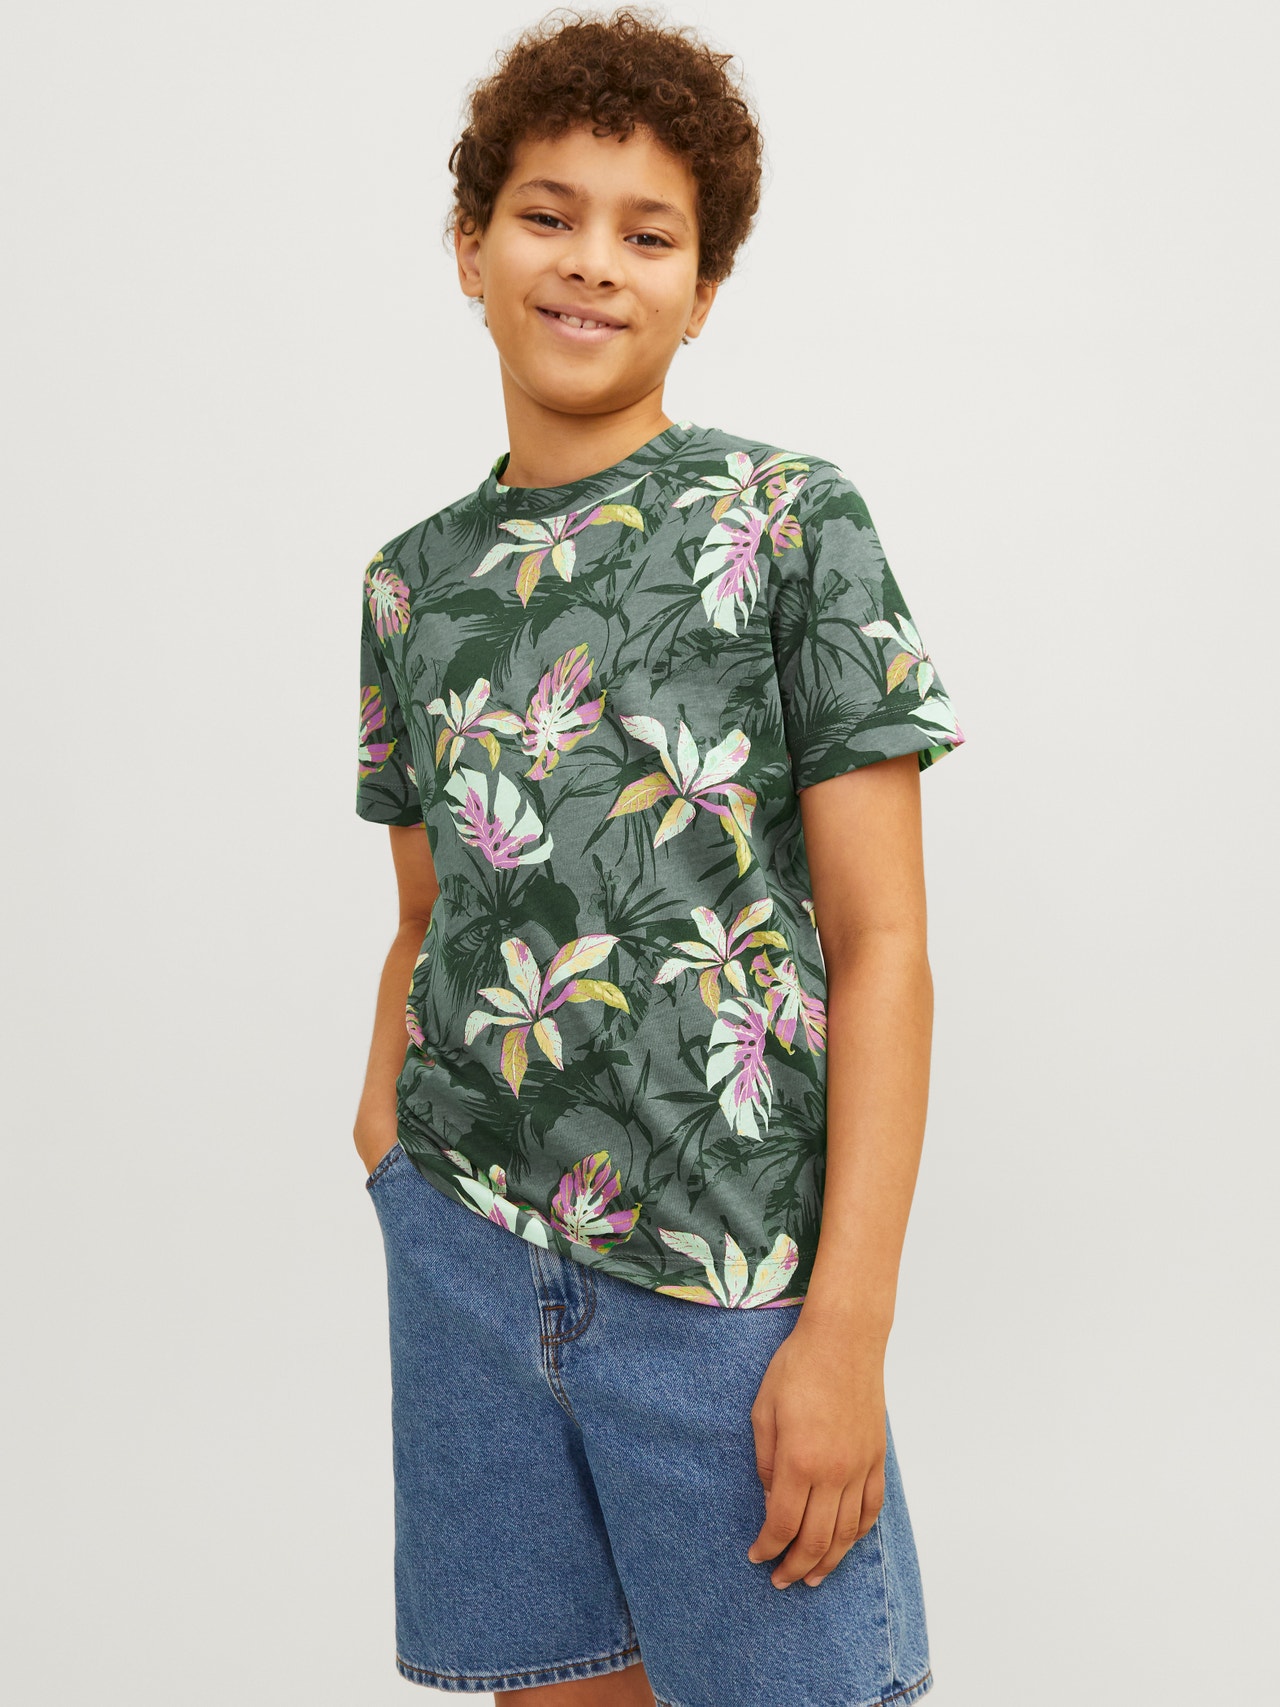 Jack & Jones All Over Print T-shirt For boys -Laurel Wreath - 12254029